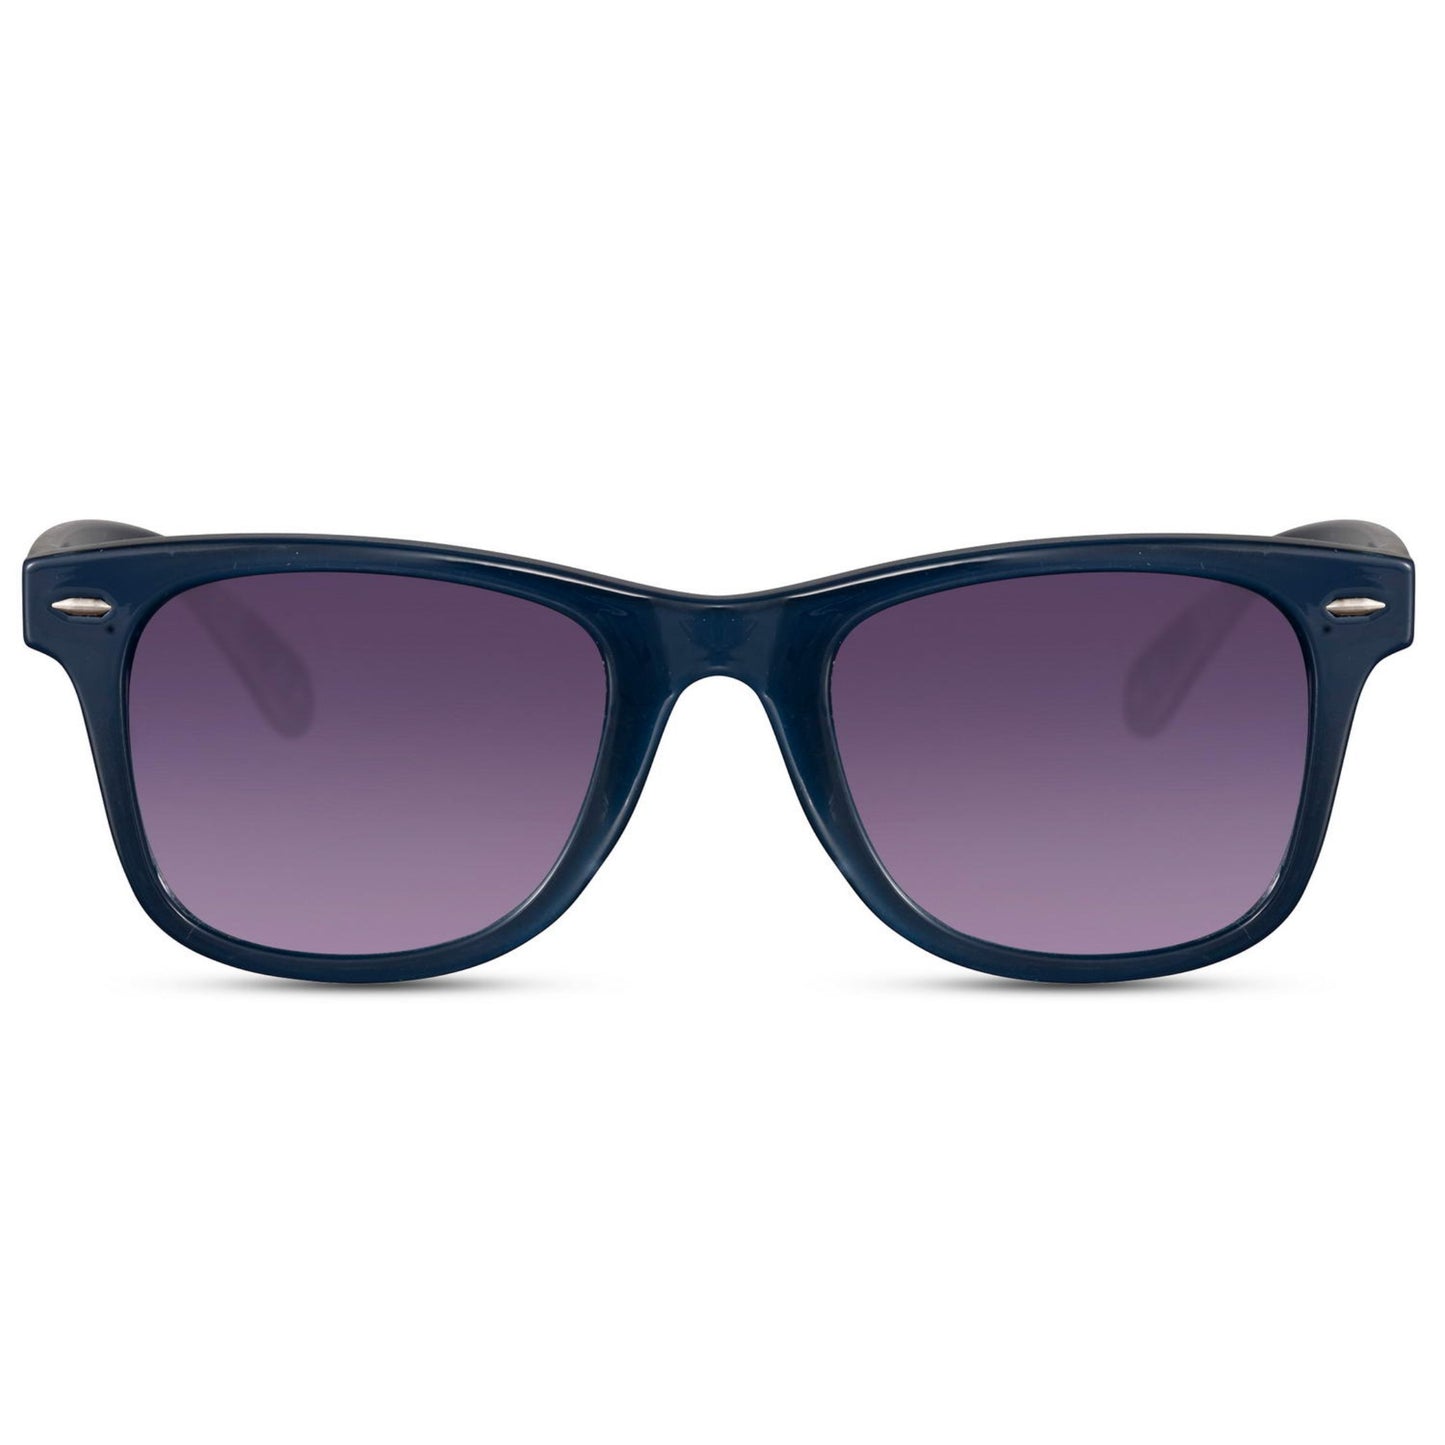 Nevada - Sunglasses - Exposure Sunglasses - NDL6186